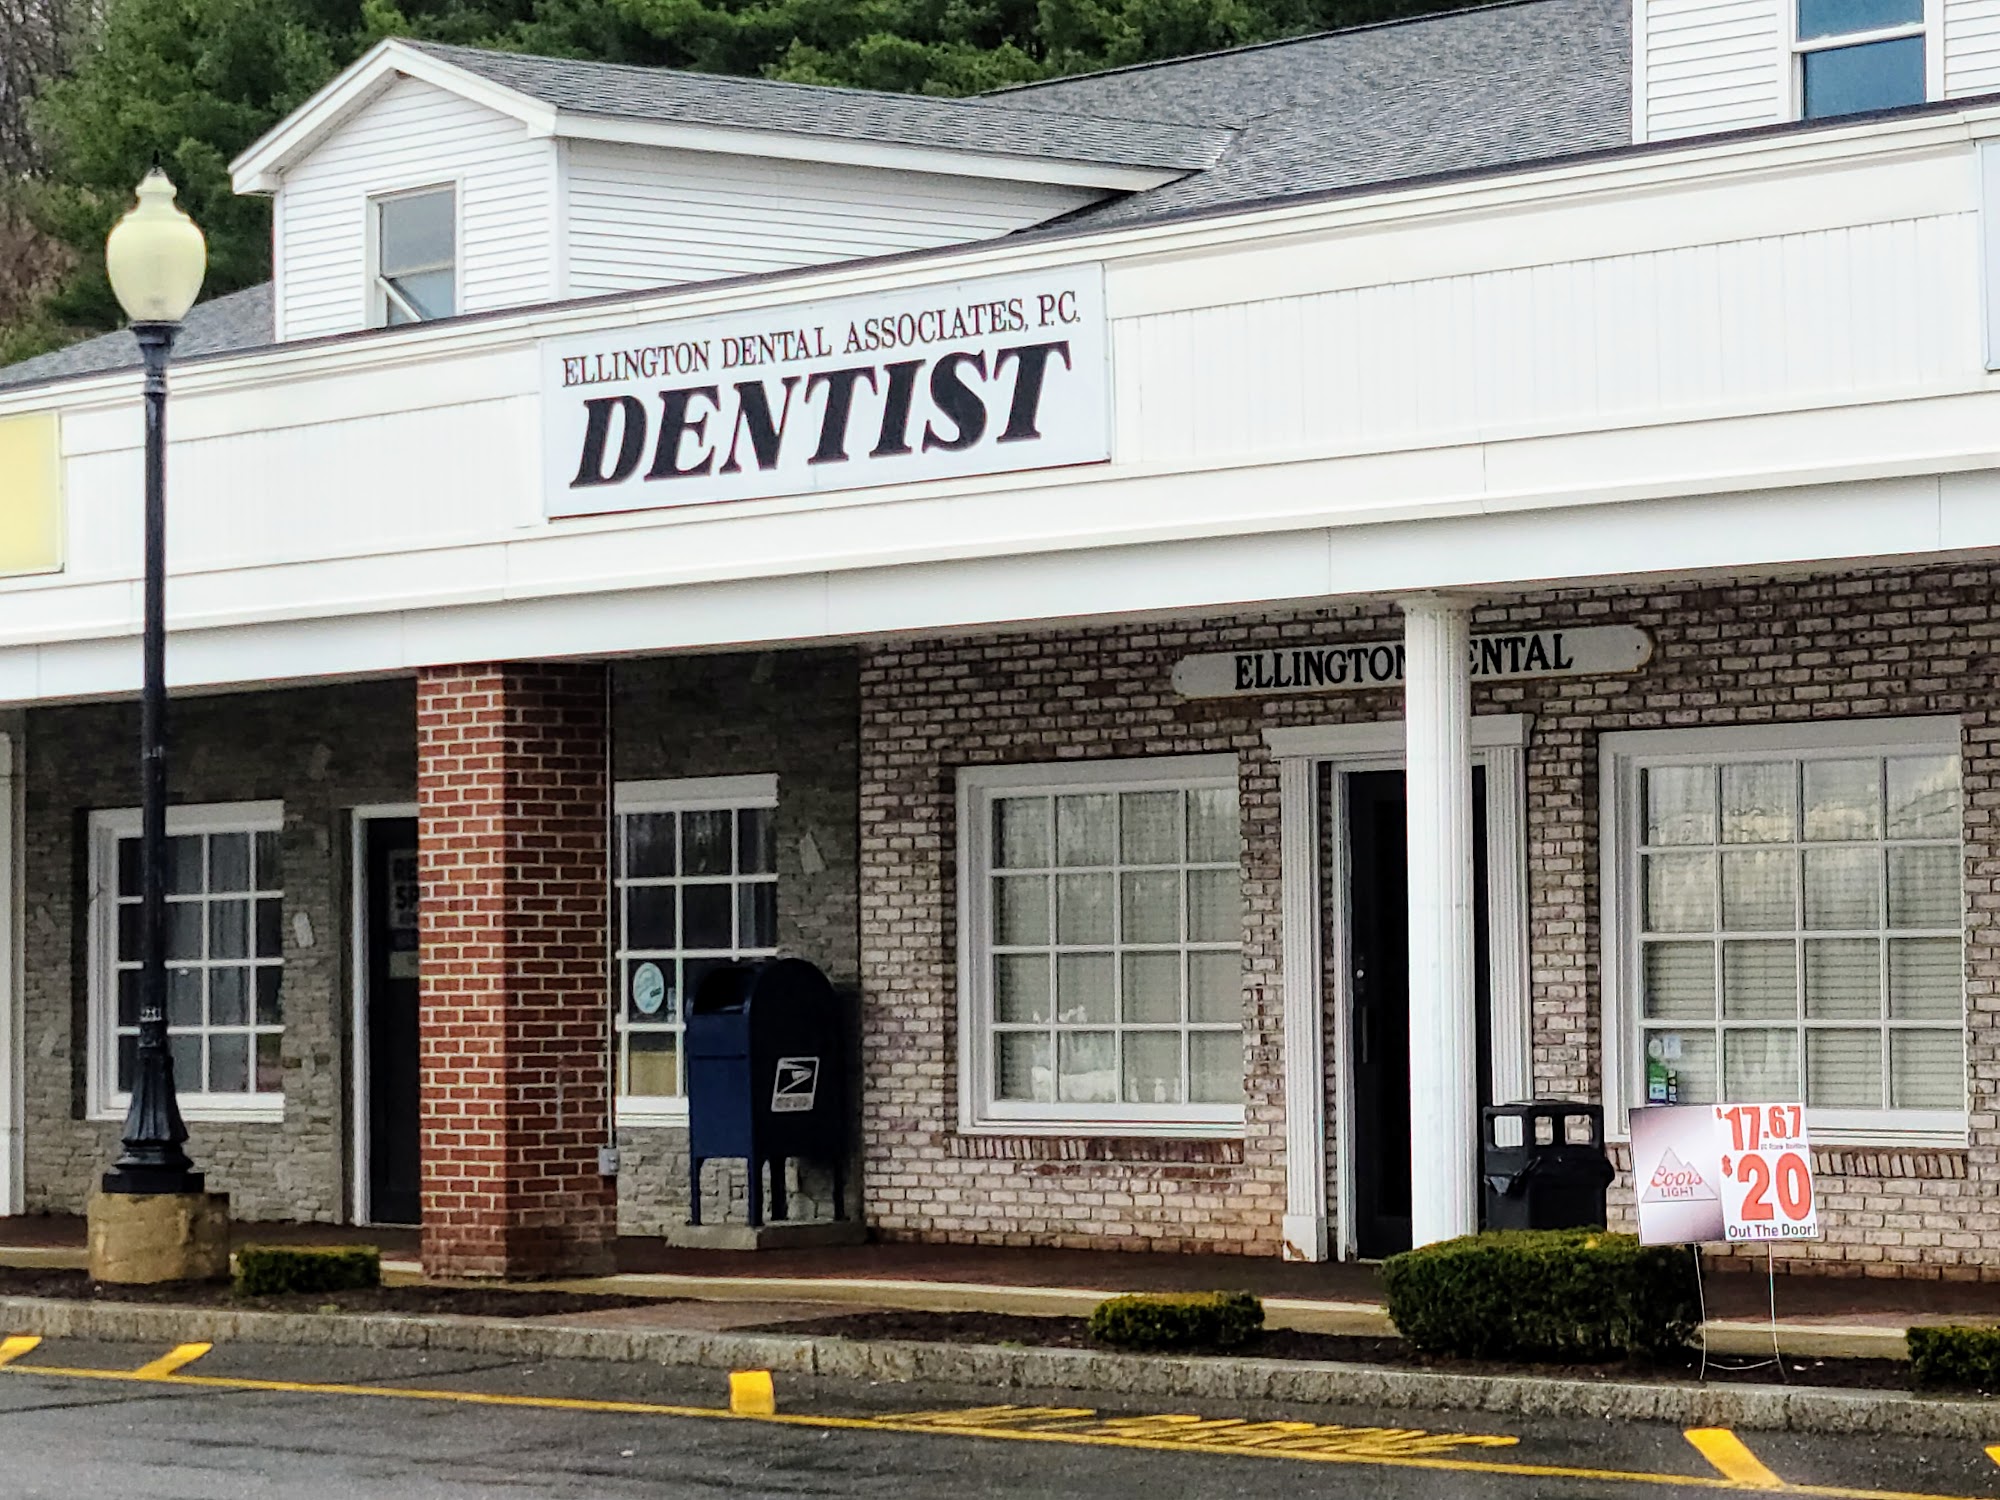 Ellington Dental Associates, P.C.